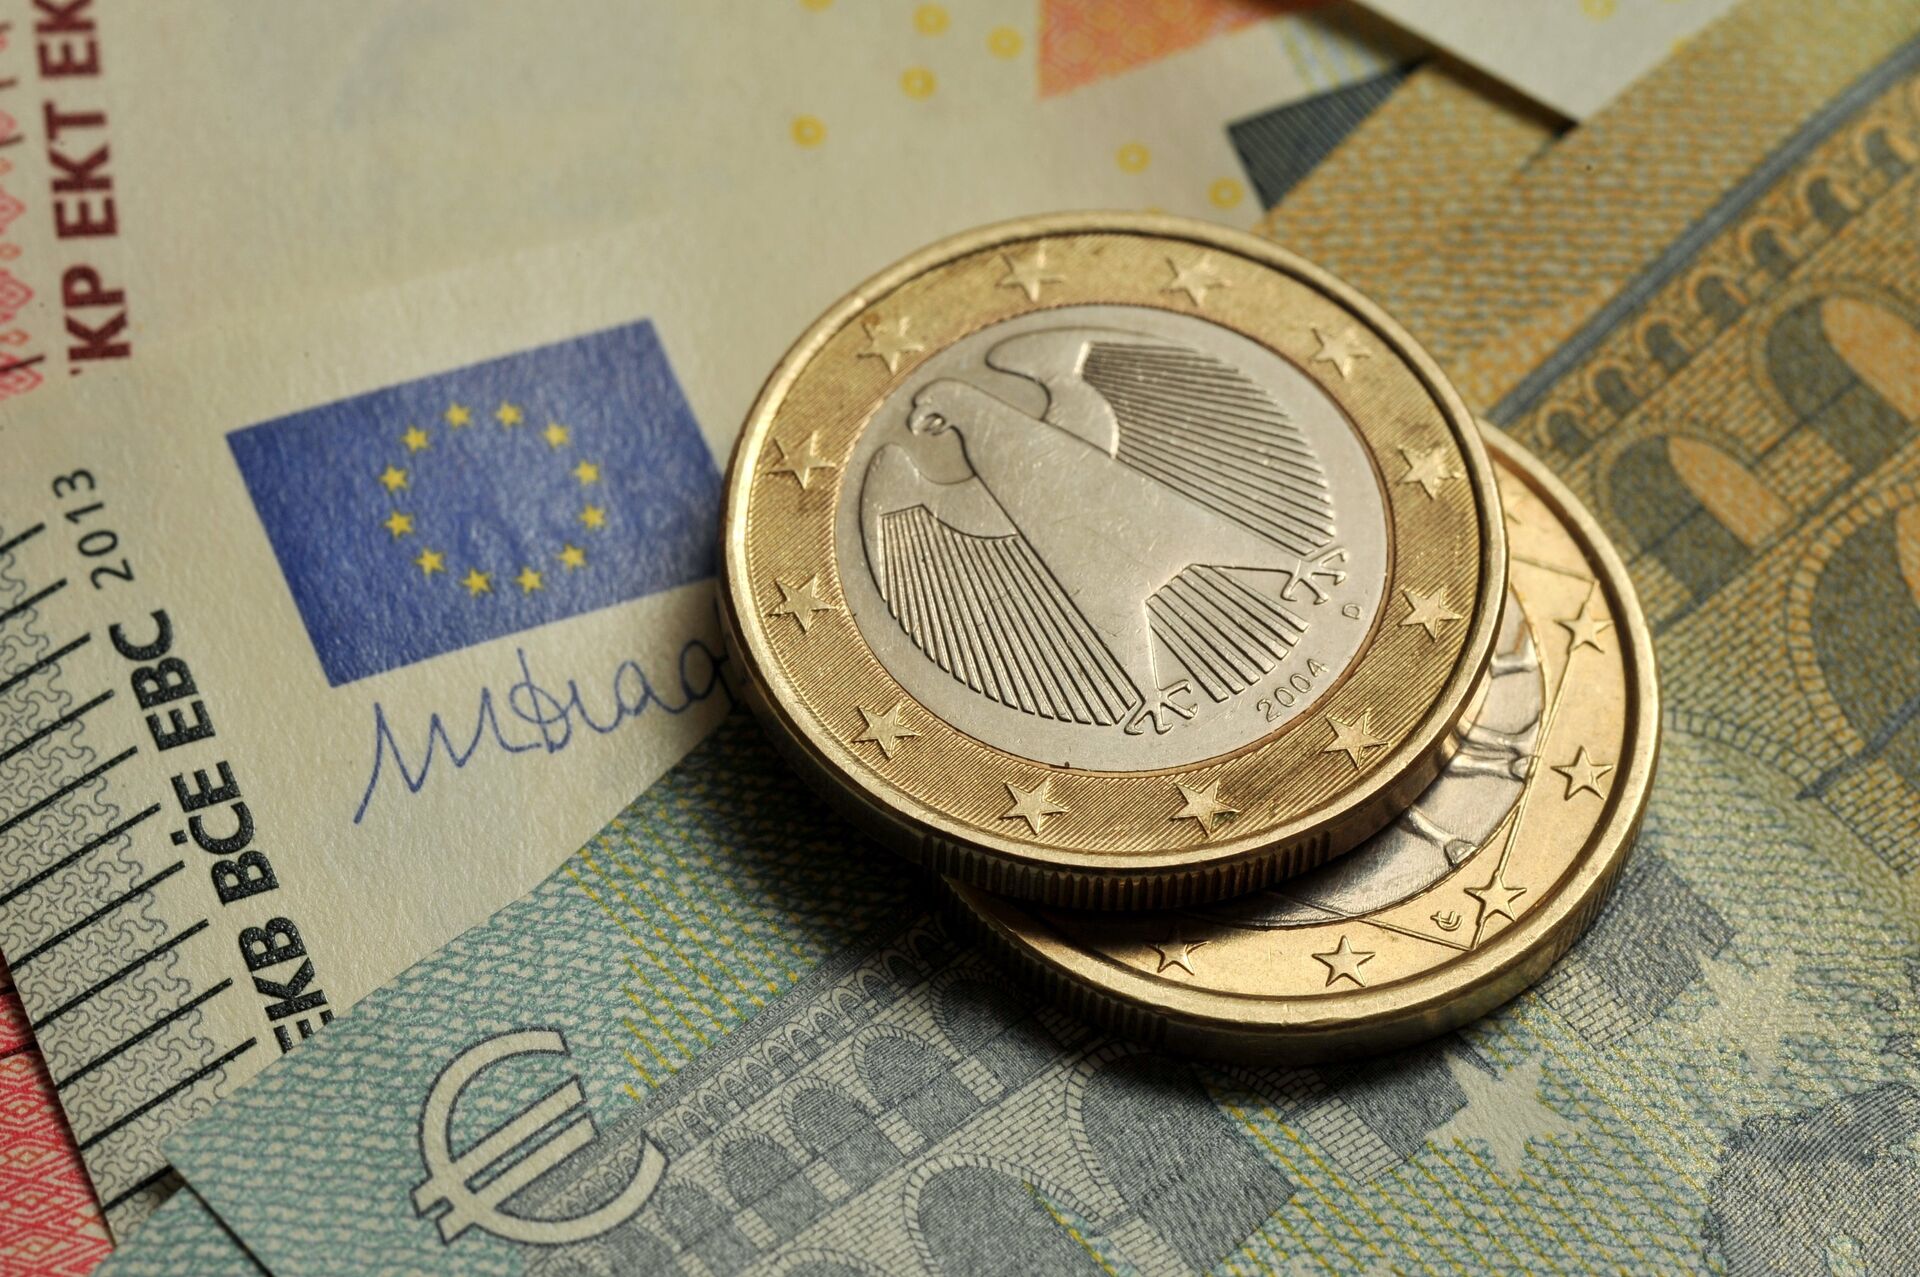 Монеты номиналом 1 евро и банкноты евро различного номинала - ПРАЙМ, 1920, 04.06.2021